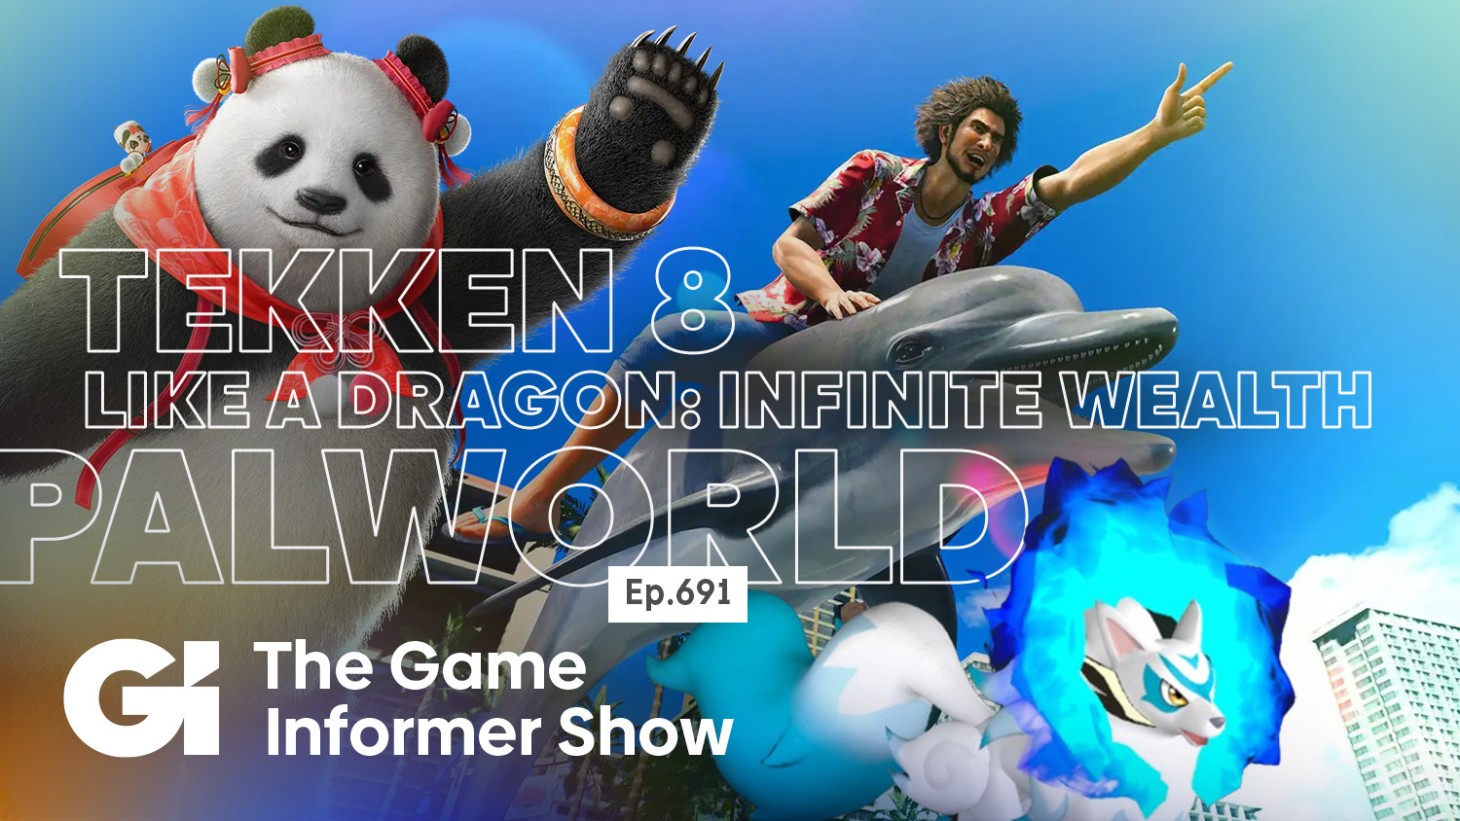 The Game Informer Show Tekken 8 Review Like A Dragon: Infinite Wealth Palworld